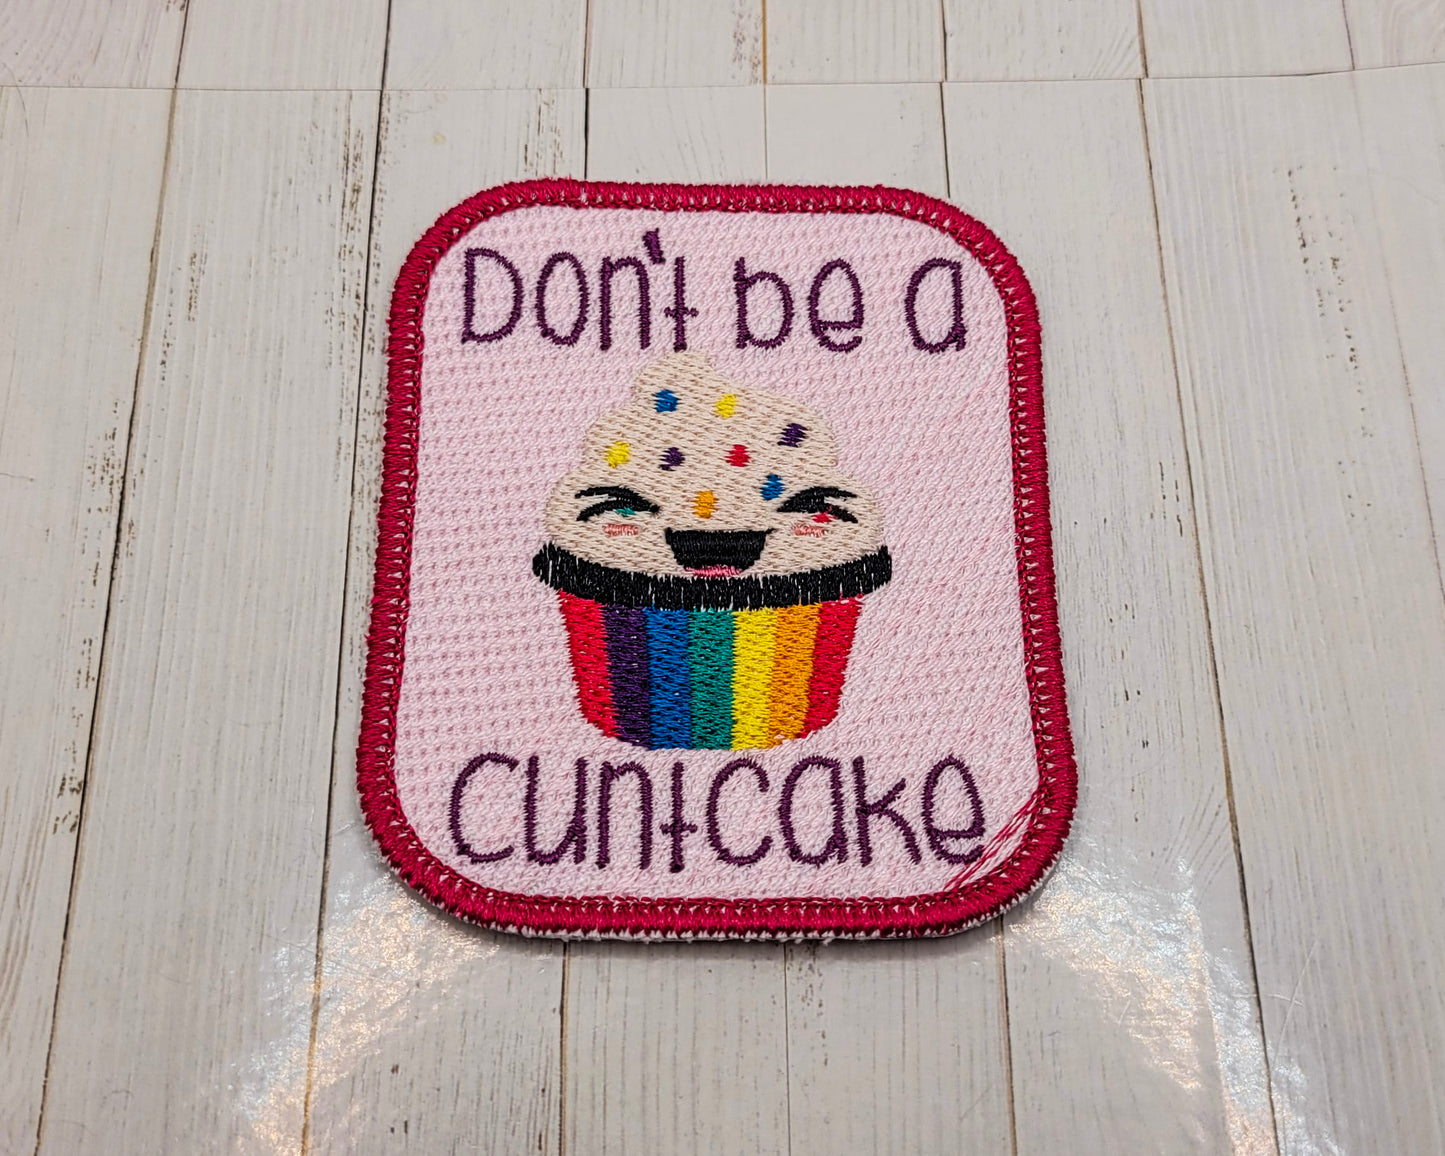 Don't Be a Cuntcake Patch